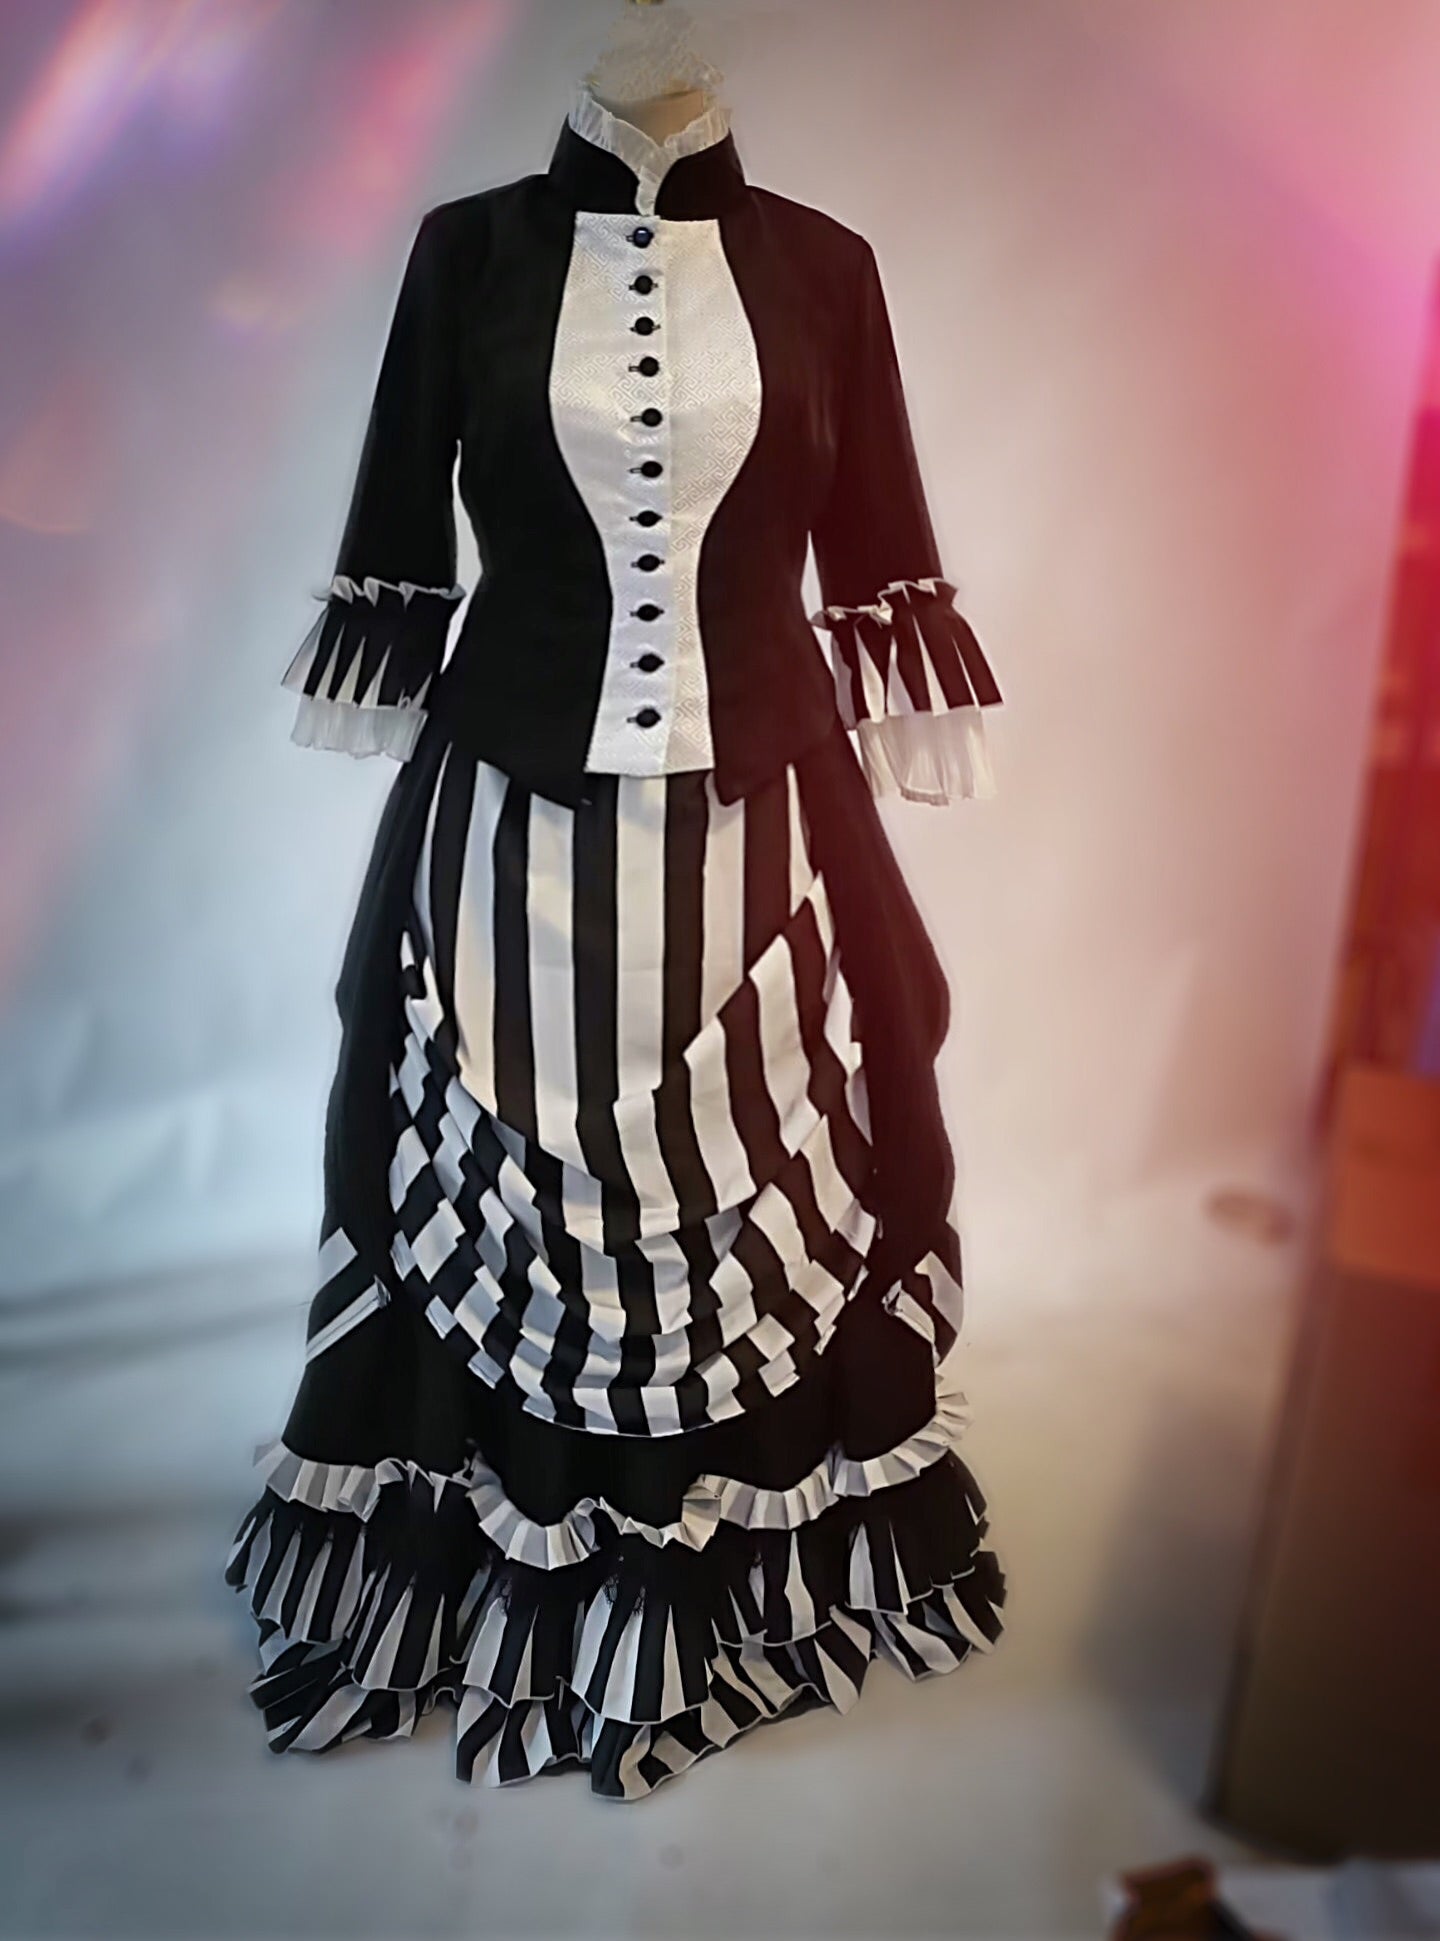 Victorian Halloween dress